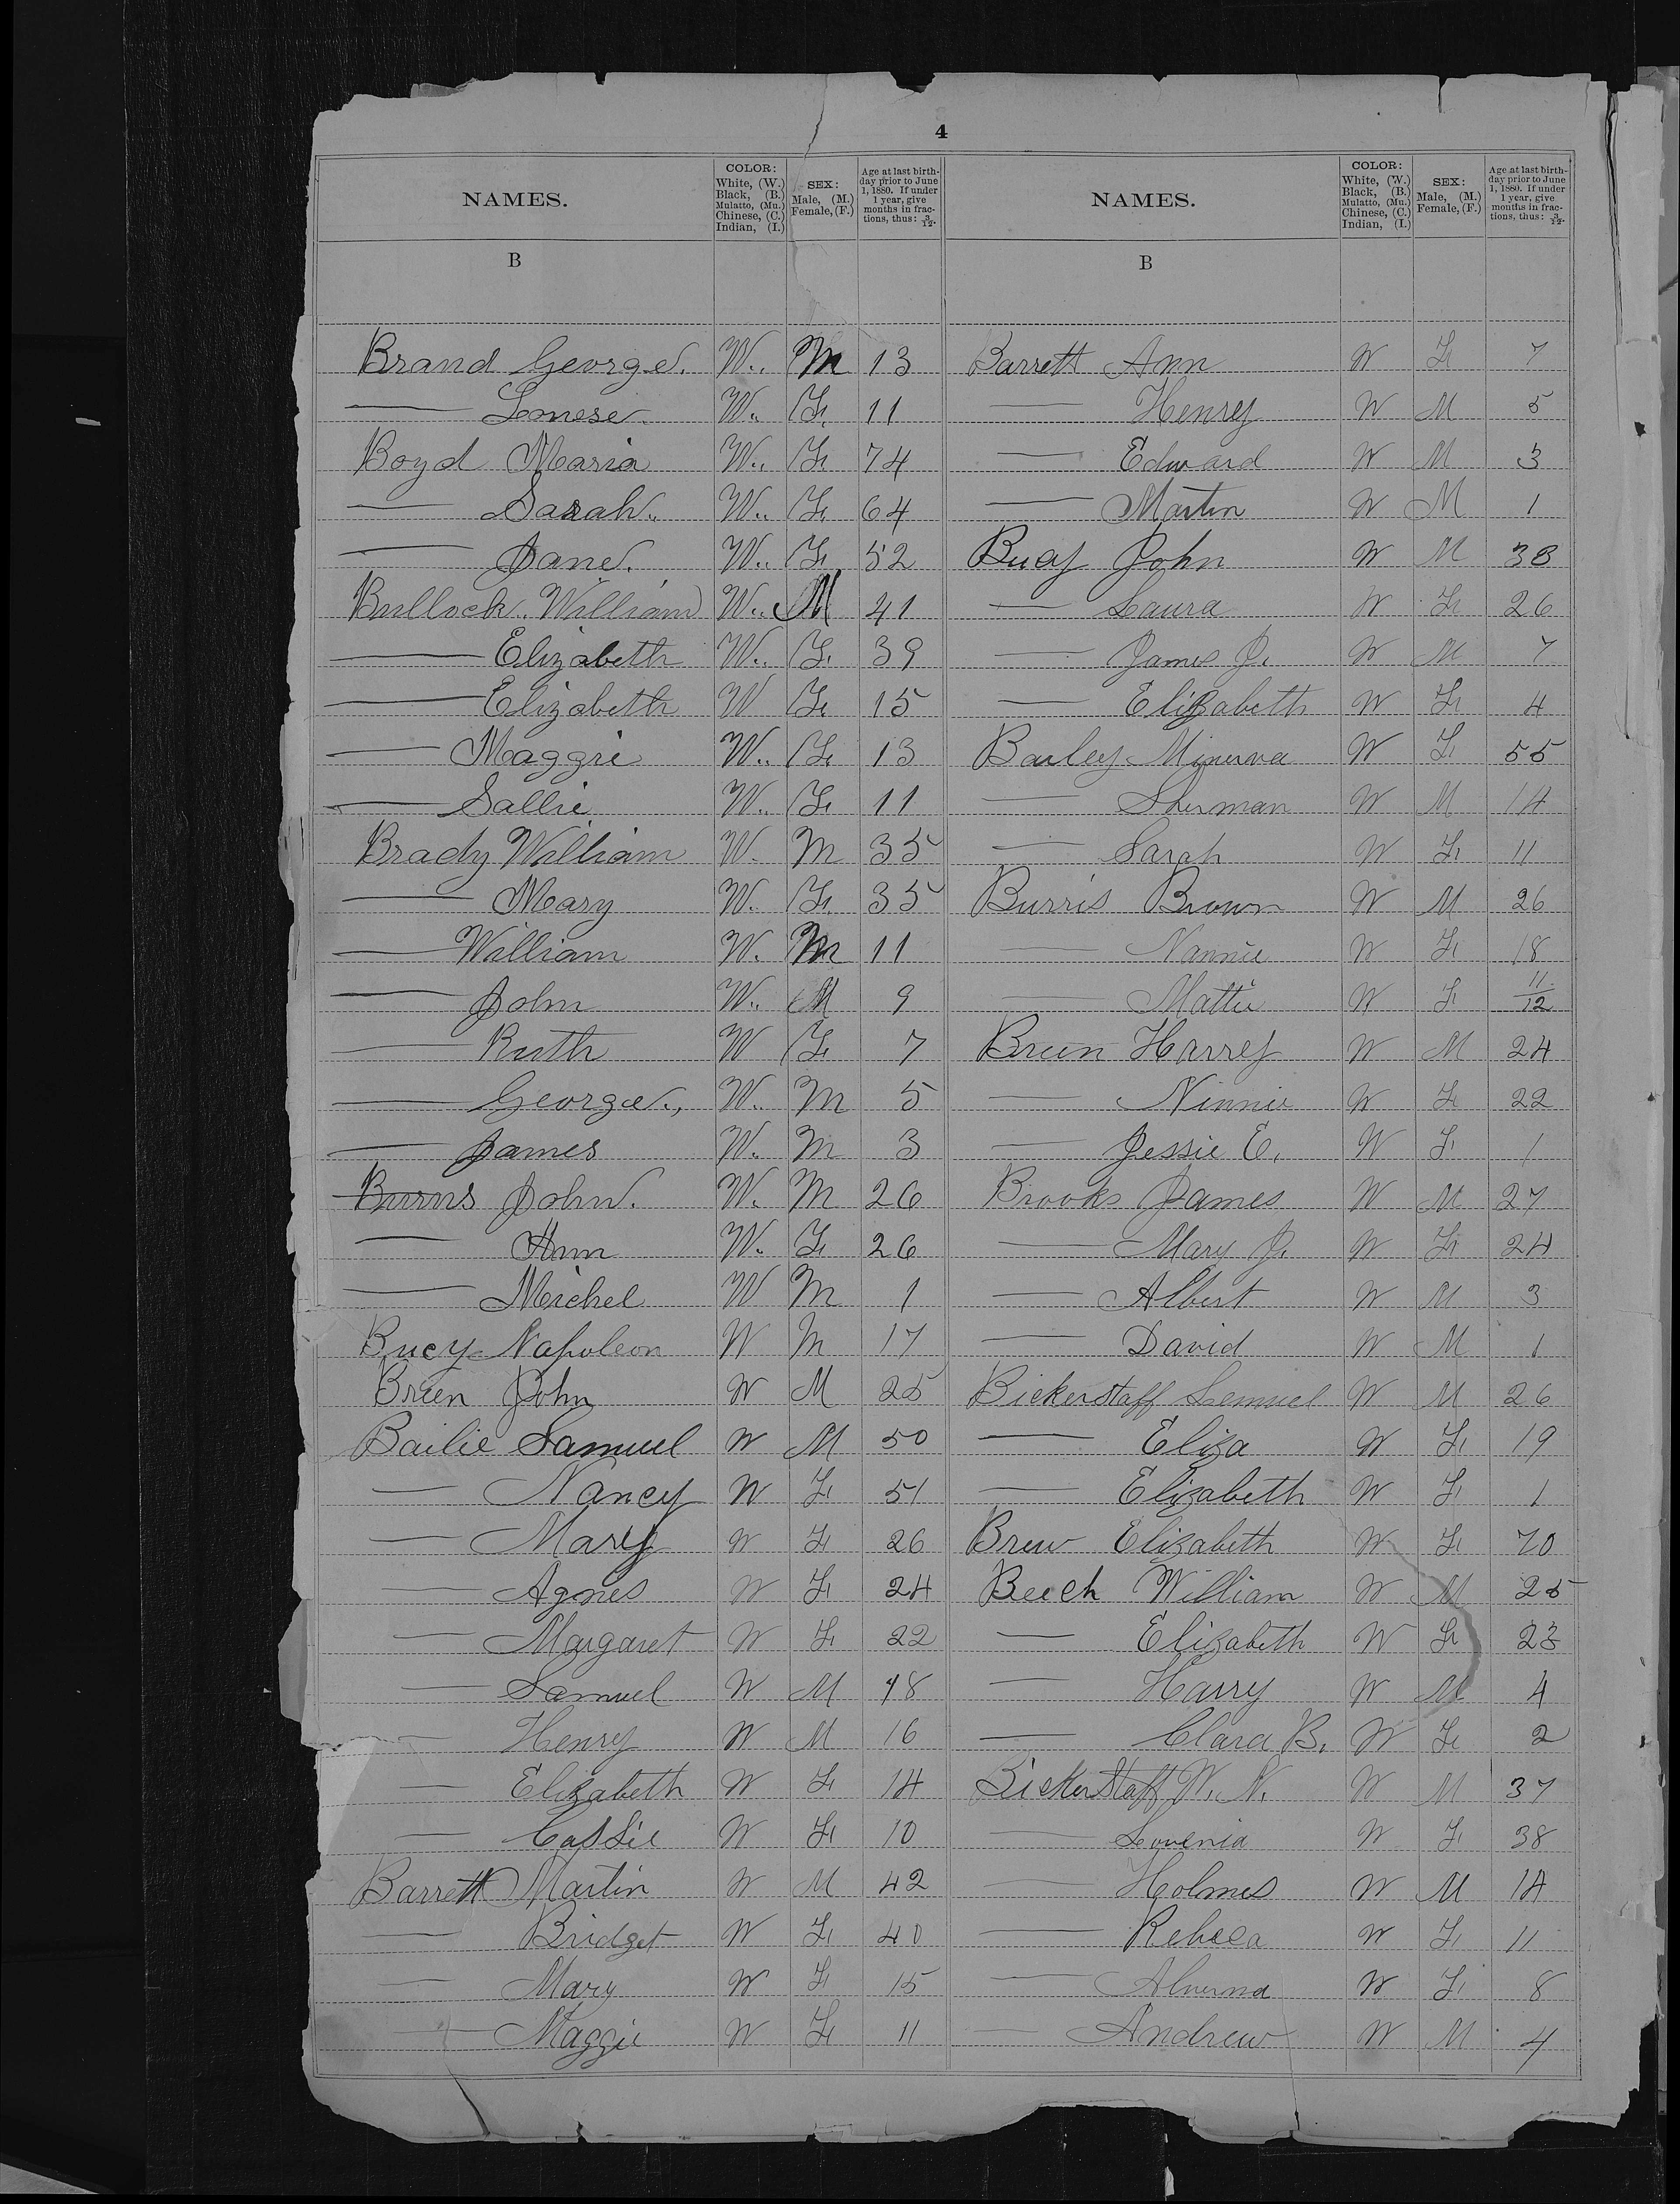 Ohio Censuses & Substitute Name Lists 1787-2013 - SOFTBOUND